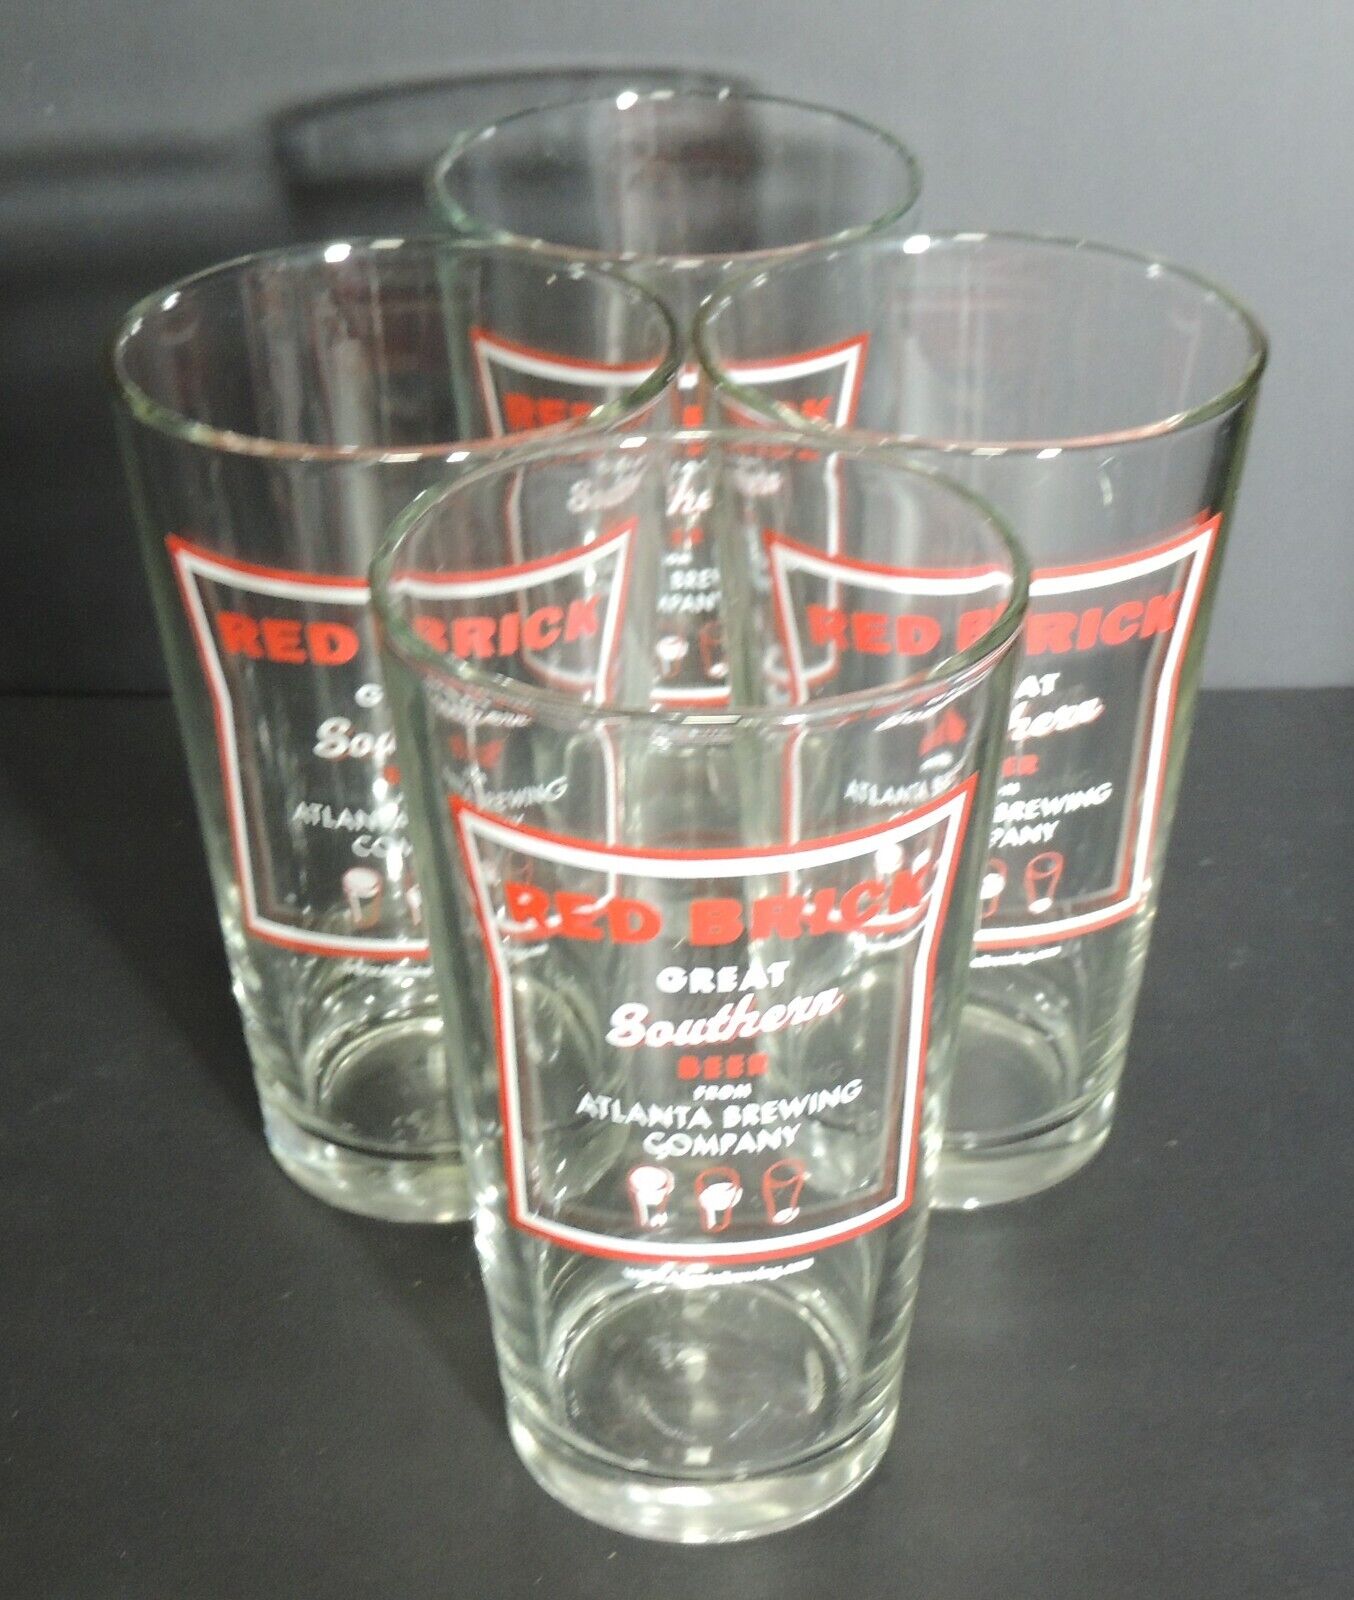 RED BRICK Great Southern Beer Atlanta Brewing Company, Set Of 4 Pint Glasses